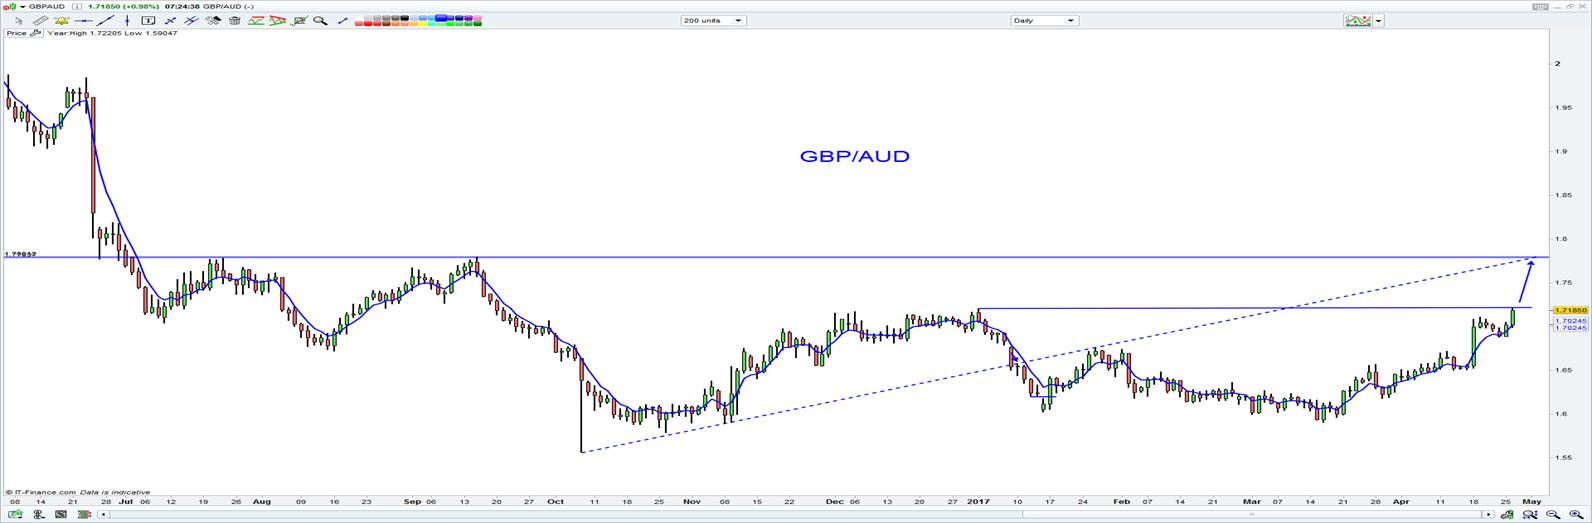 GBP/AUD Chart